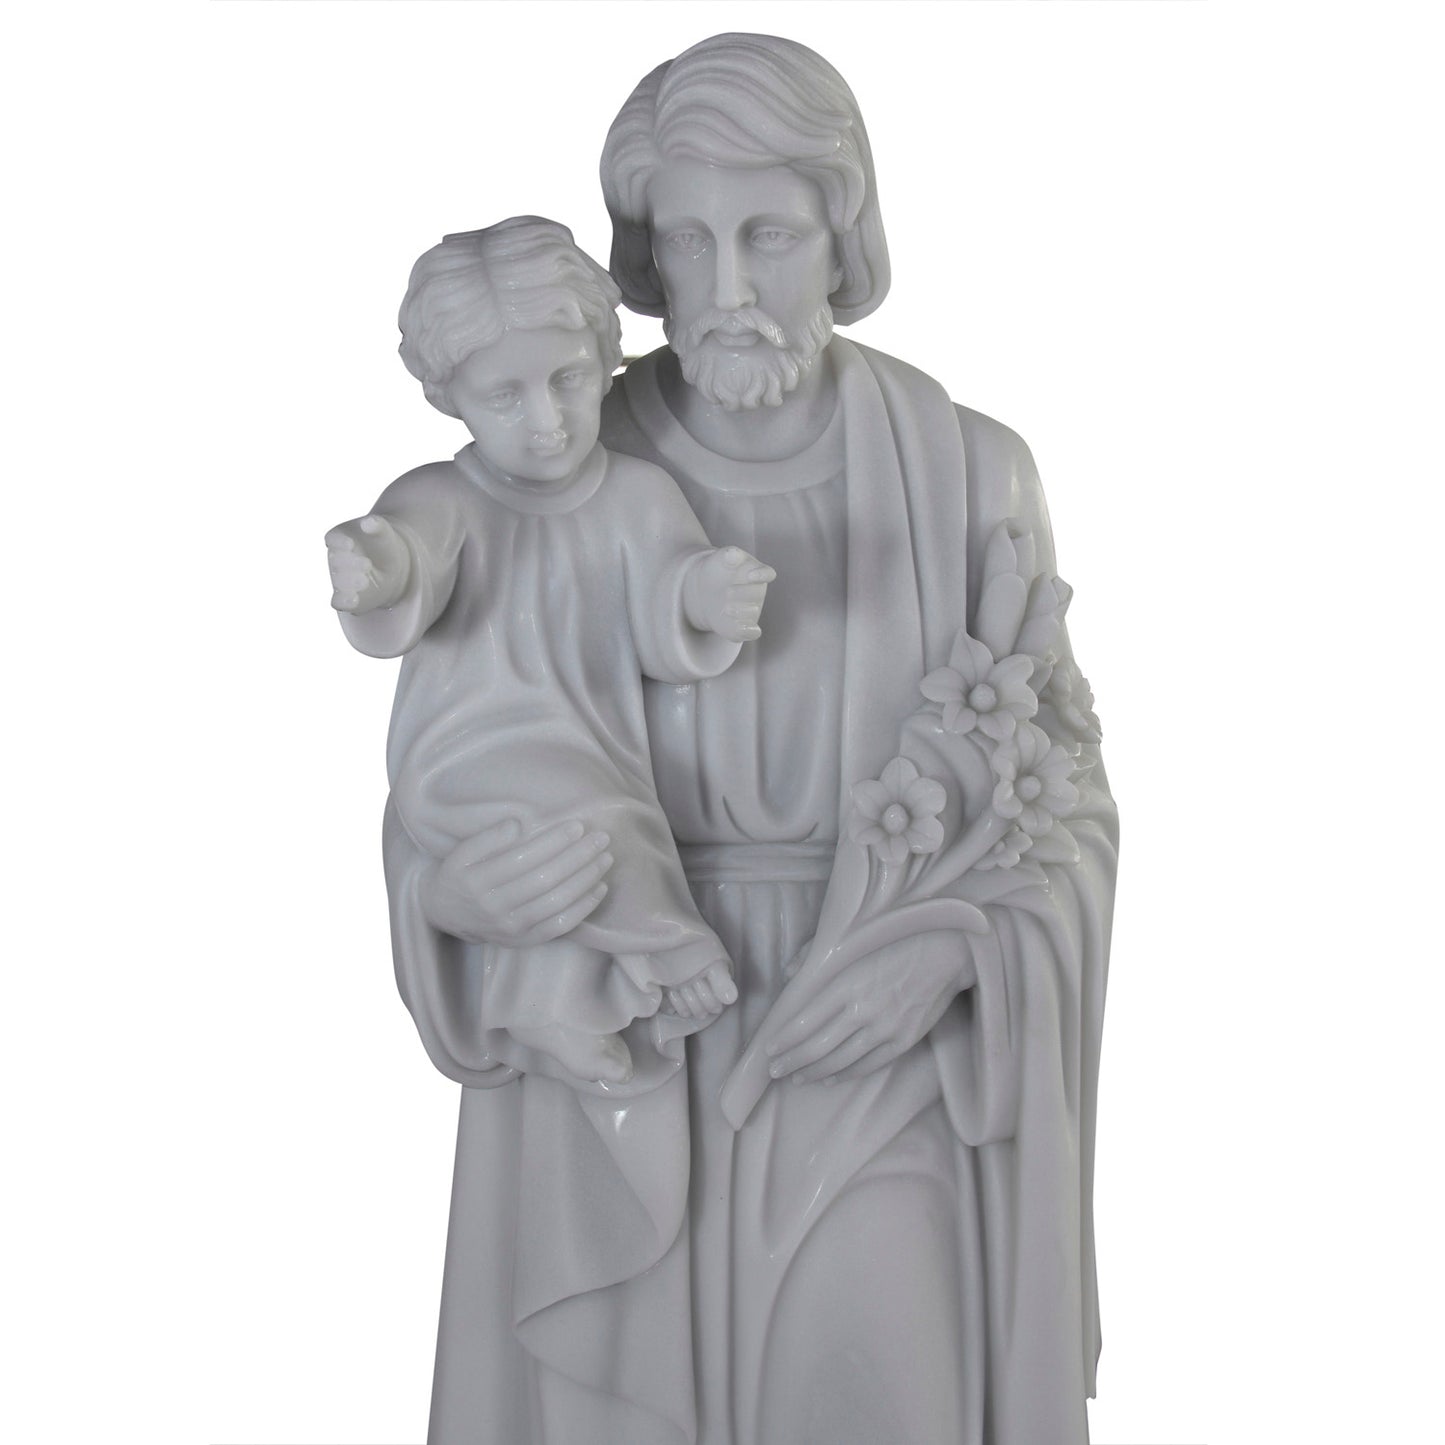 Marble Statue - St. Joseph with Child Jesus